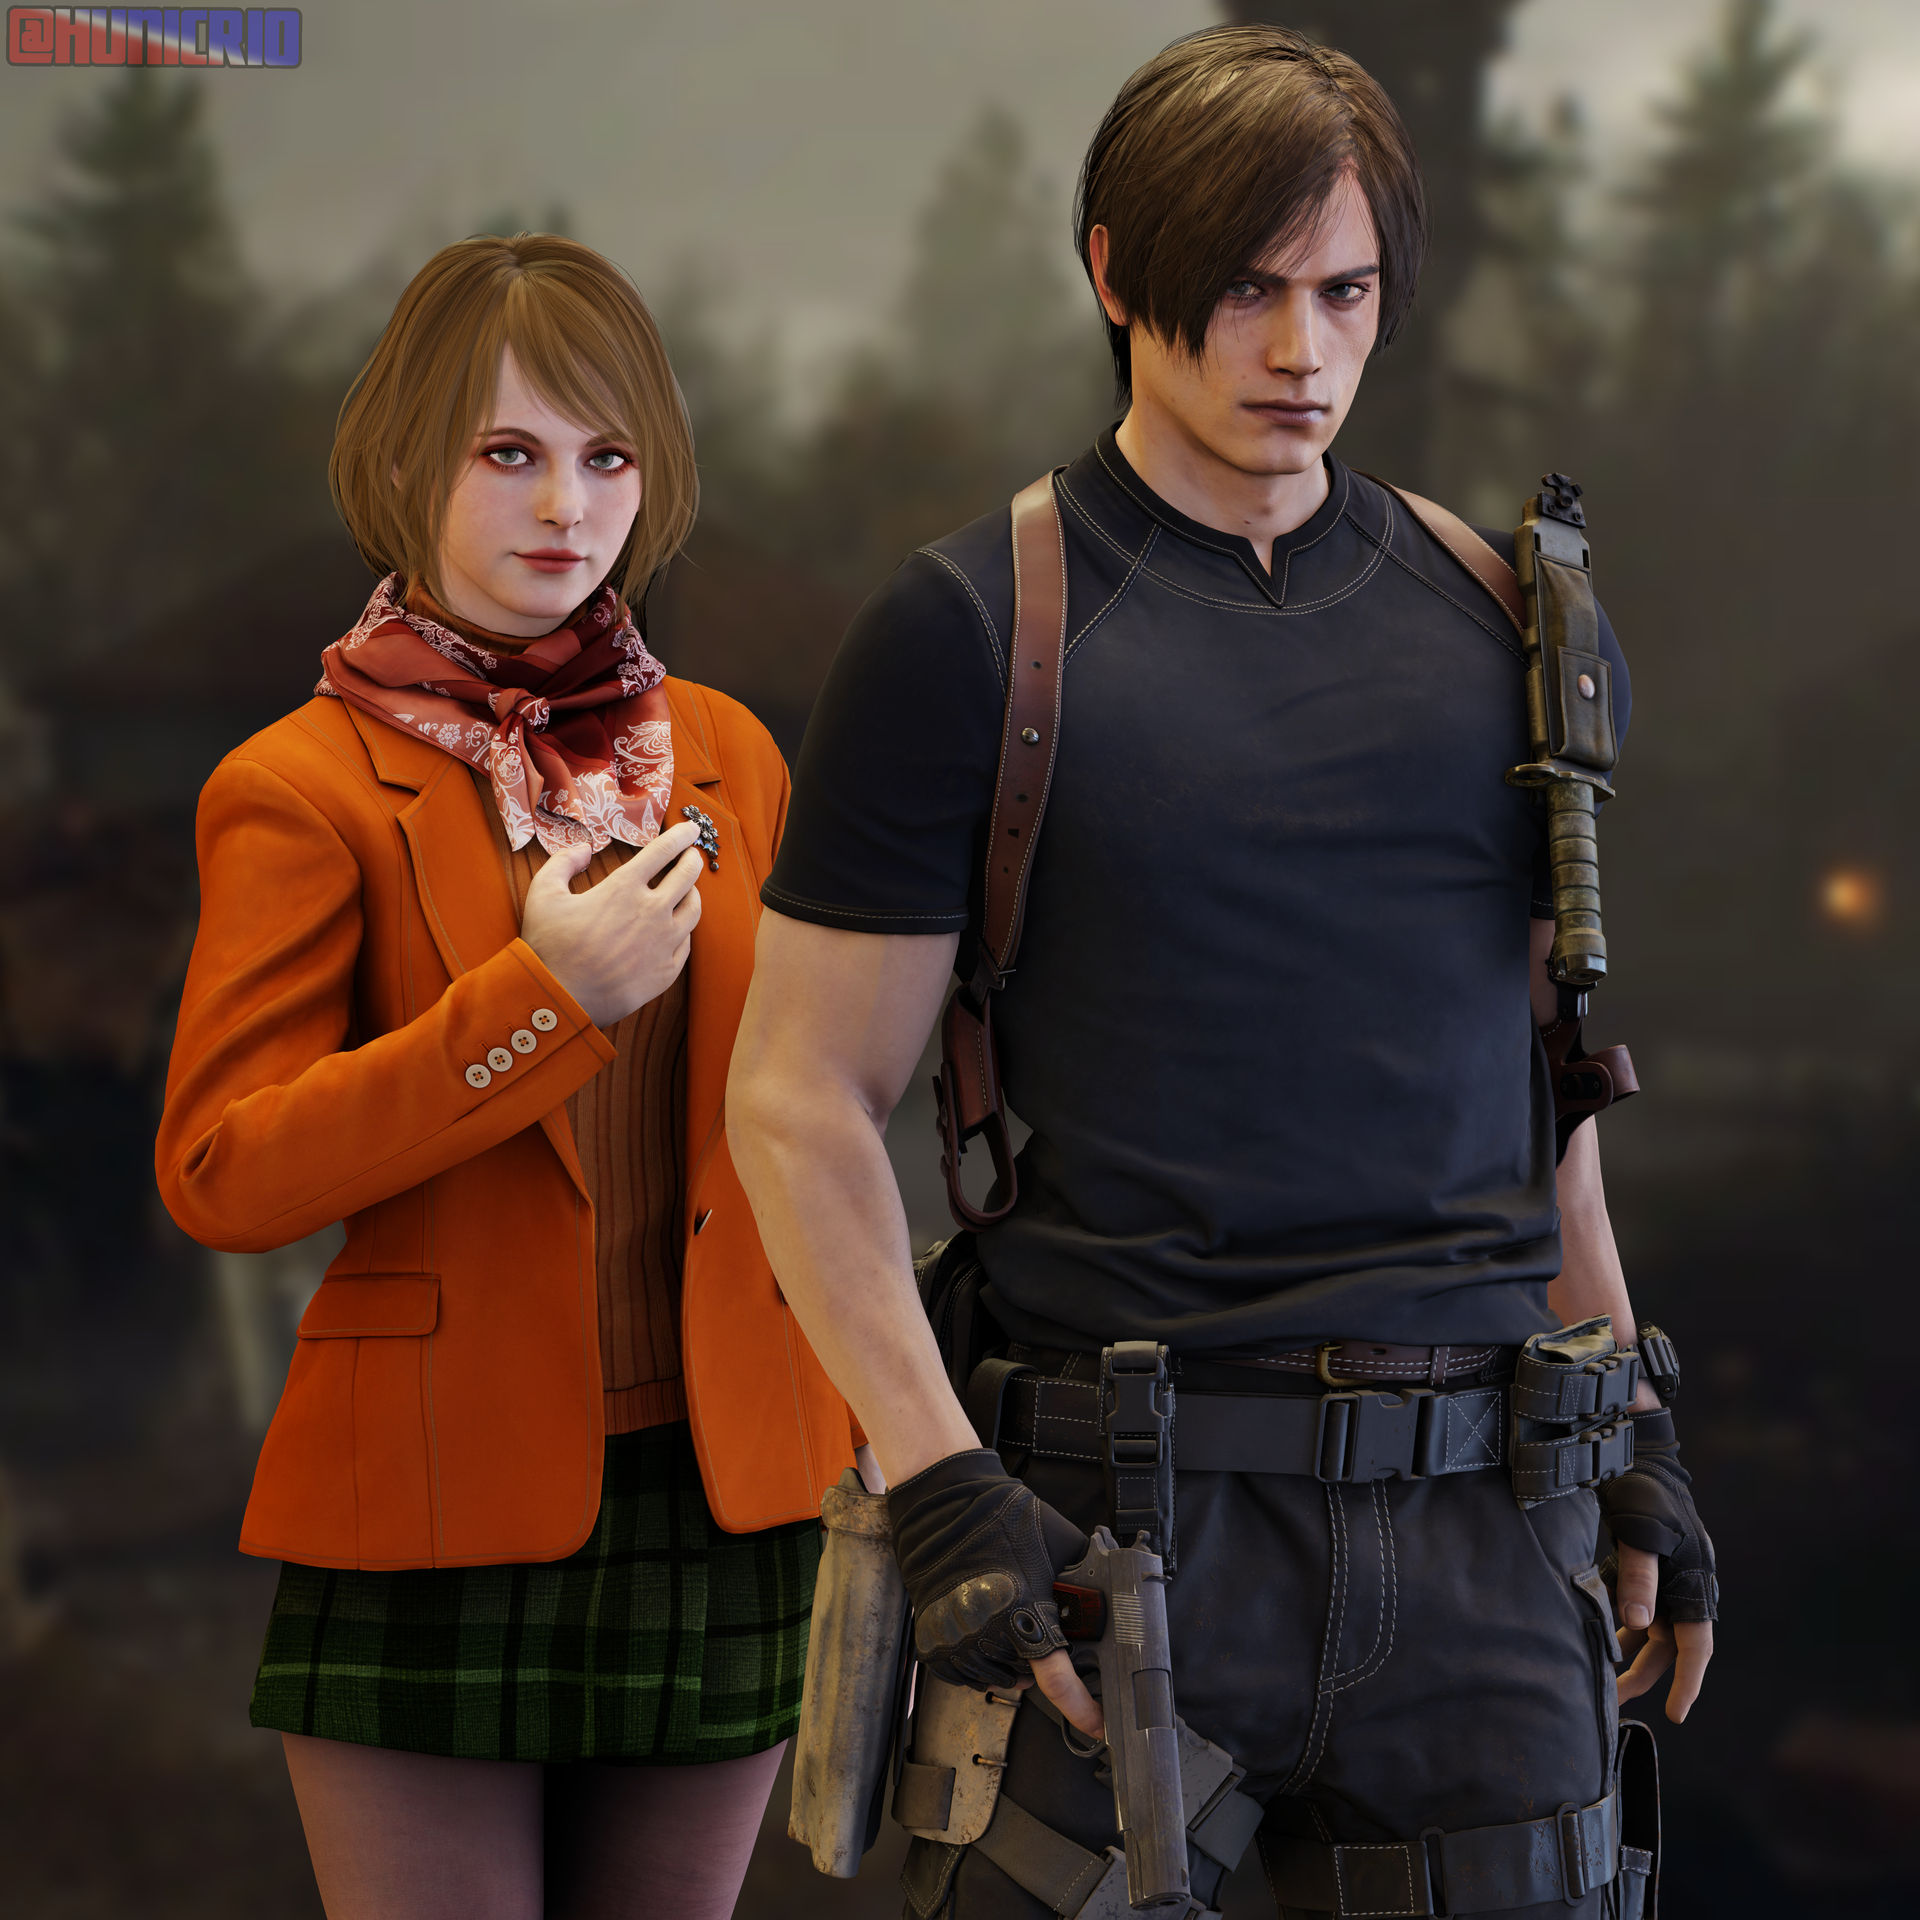 Leon and Ashley Resident Evil 4 by dante-dx on DeviantArt